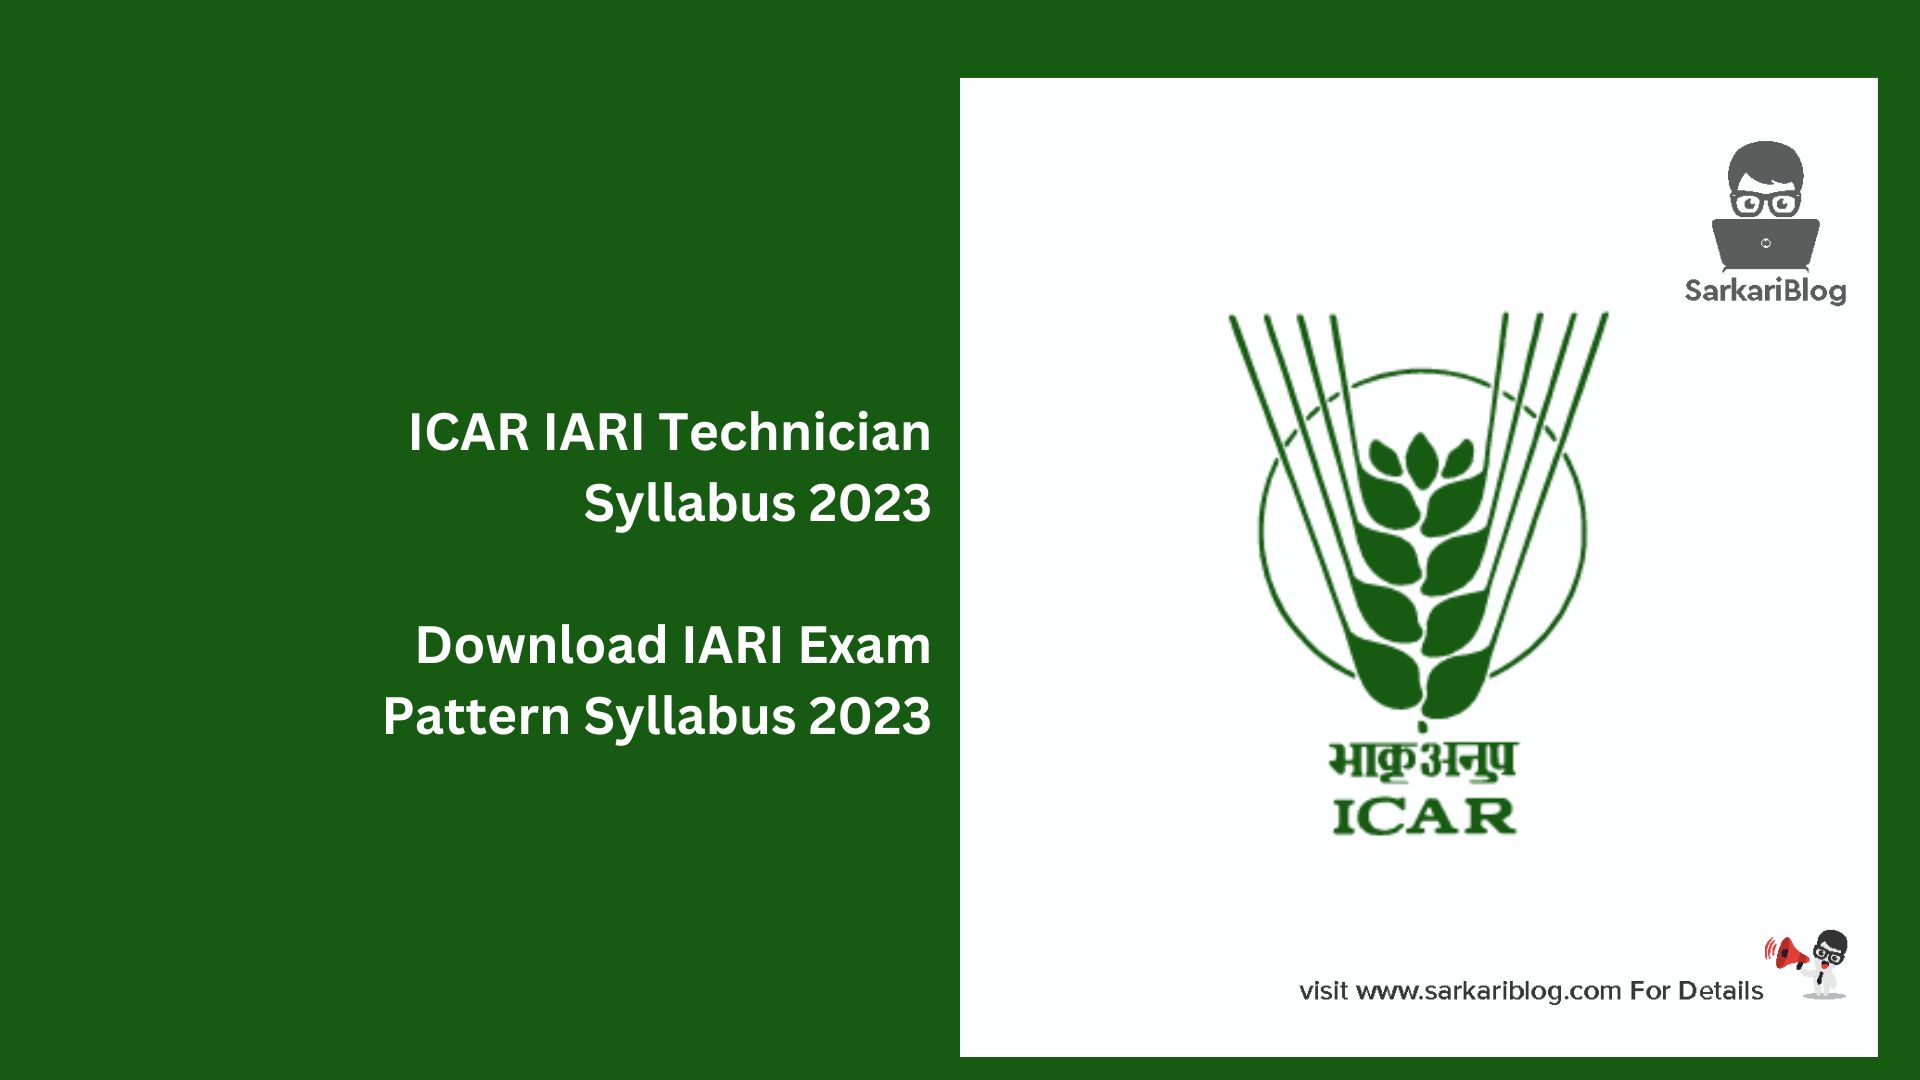 ICAR IARI Technician Syllabus 2023